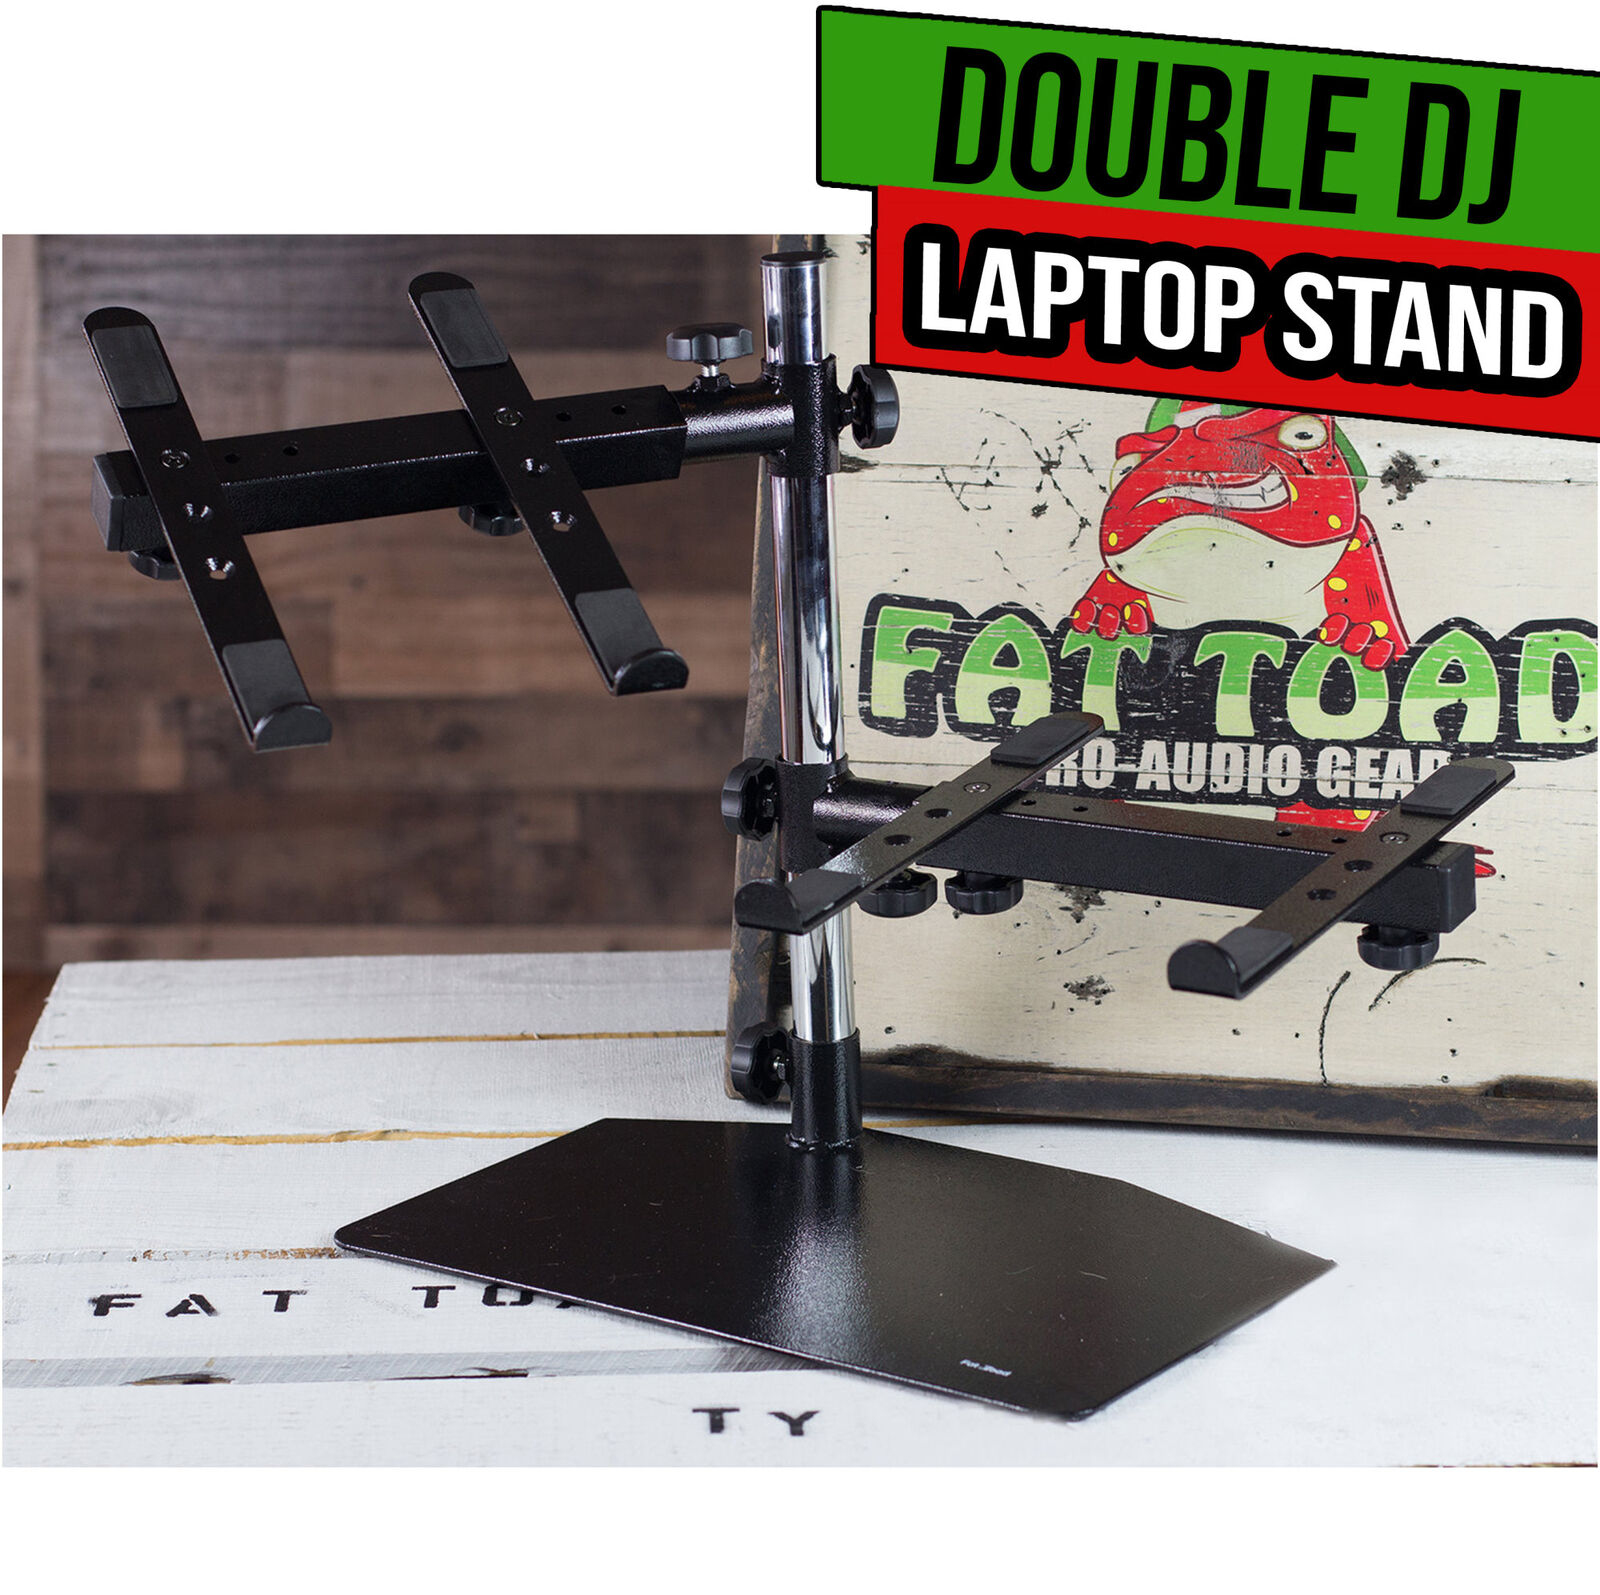 DJ Double Computer Laptop Stand - Duel Mount Holder Studio Mixer Controller Gear